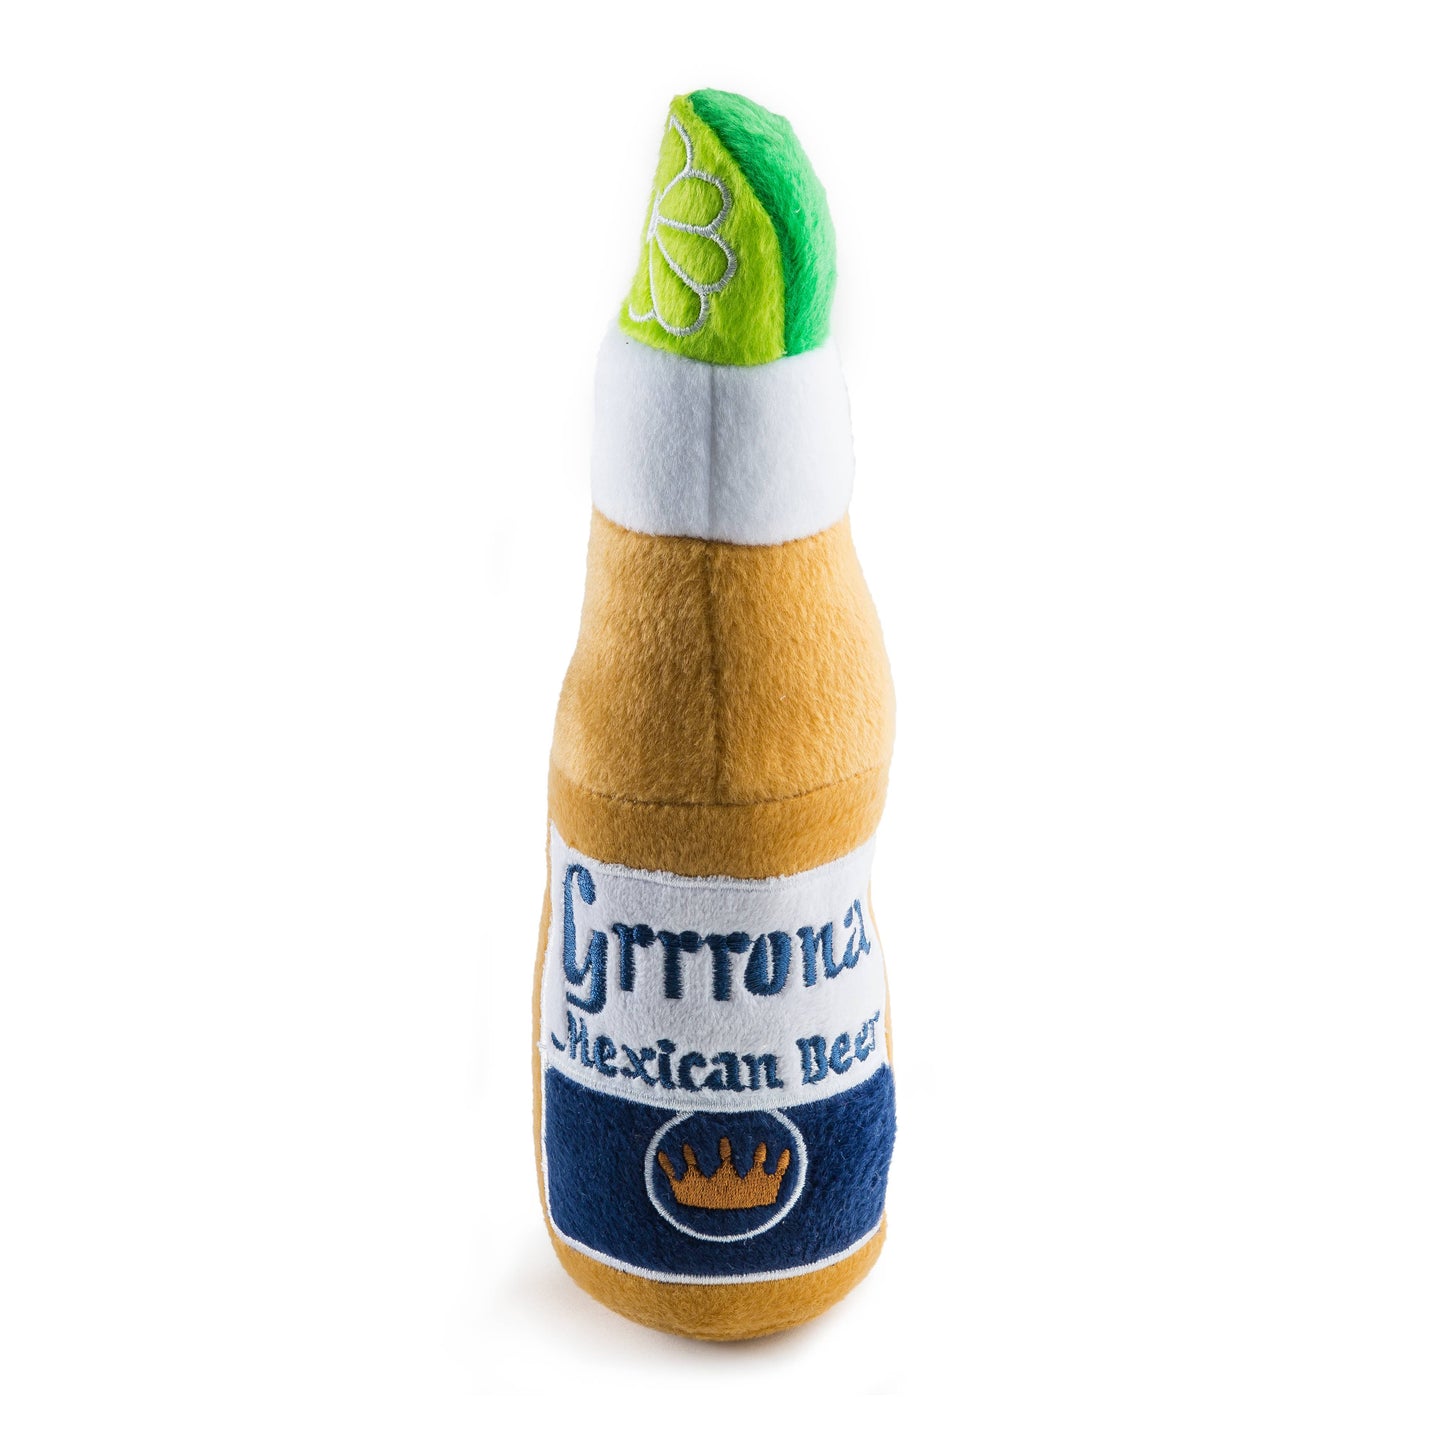 Grrrona Beer Bottle Toy Large